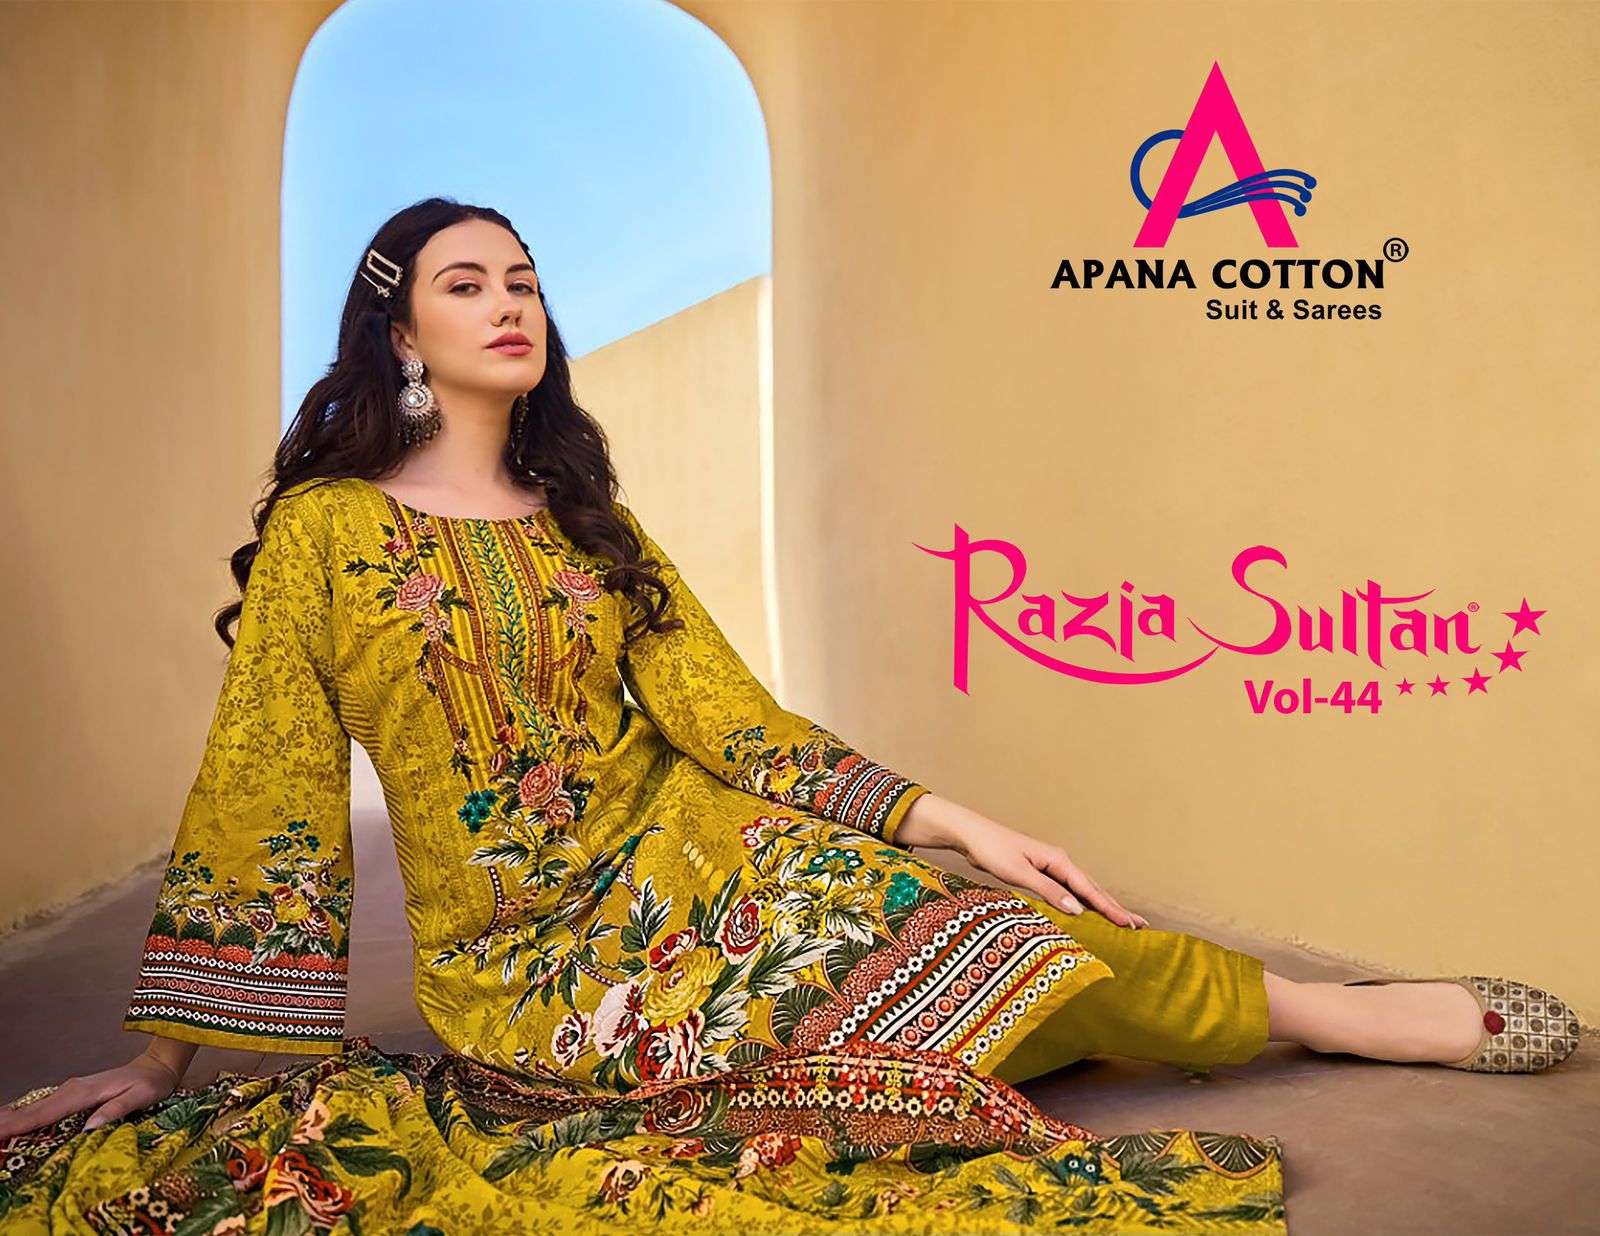 RAZIA SULTAN VOL-44 BY APANA COTTON 44001 TO 44008 SERIES COTTON DRESSES